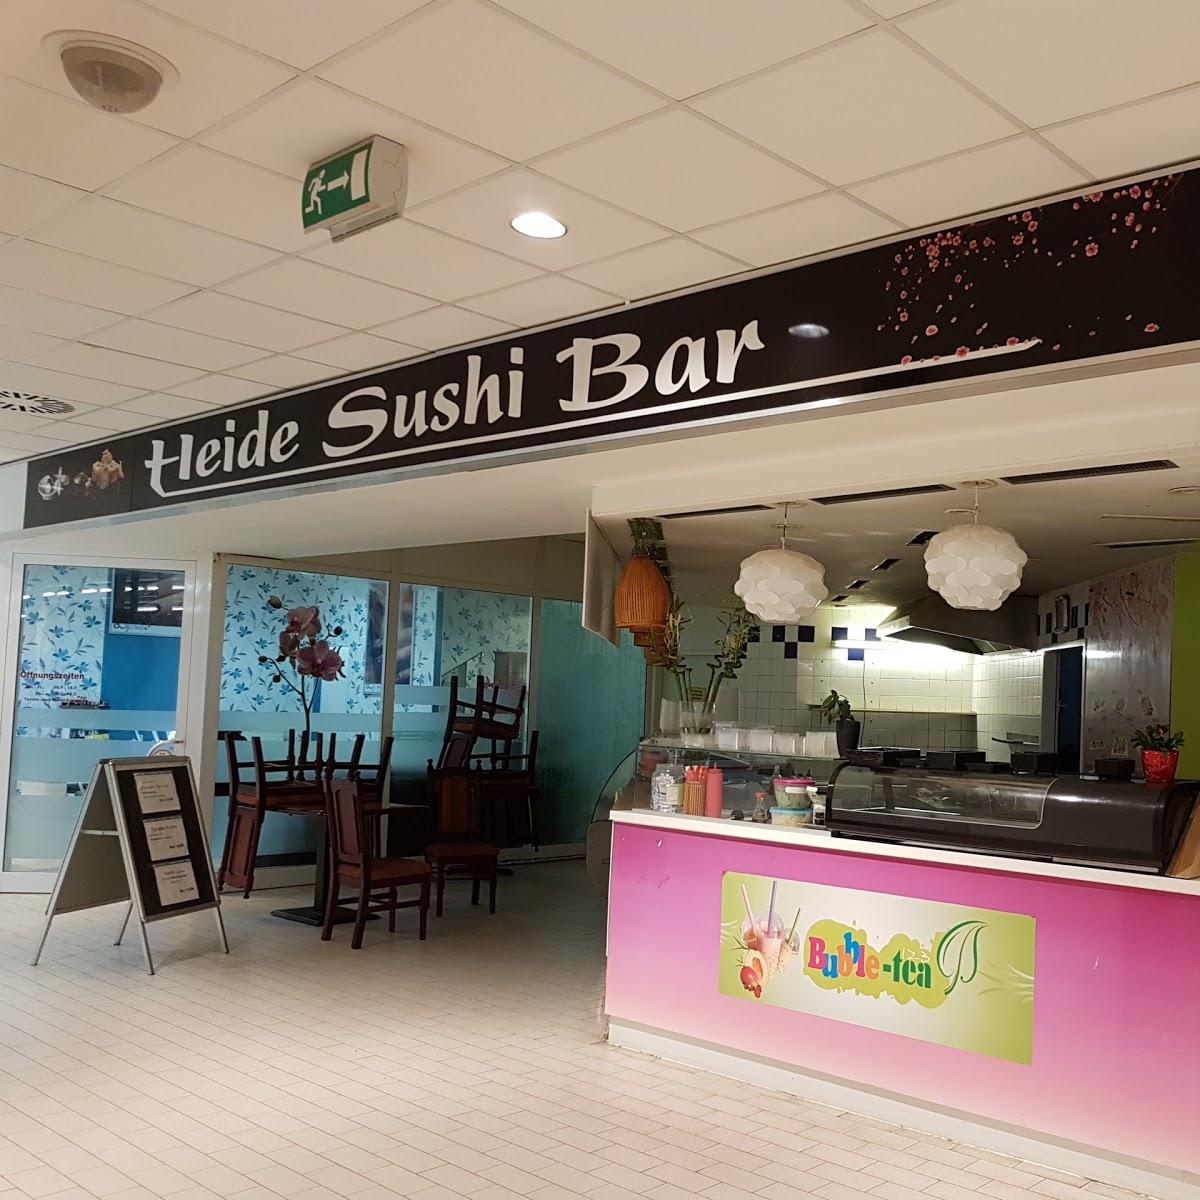 Restaurant "Heide Sushi Bar" in Dessau-Roßlau